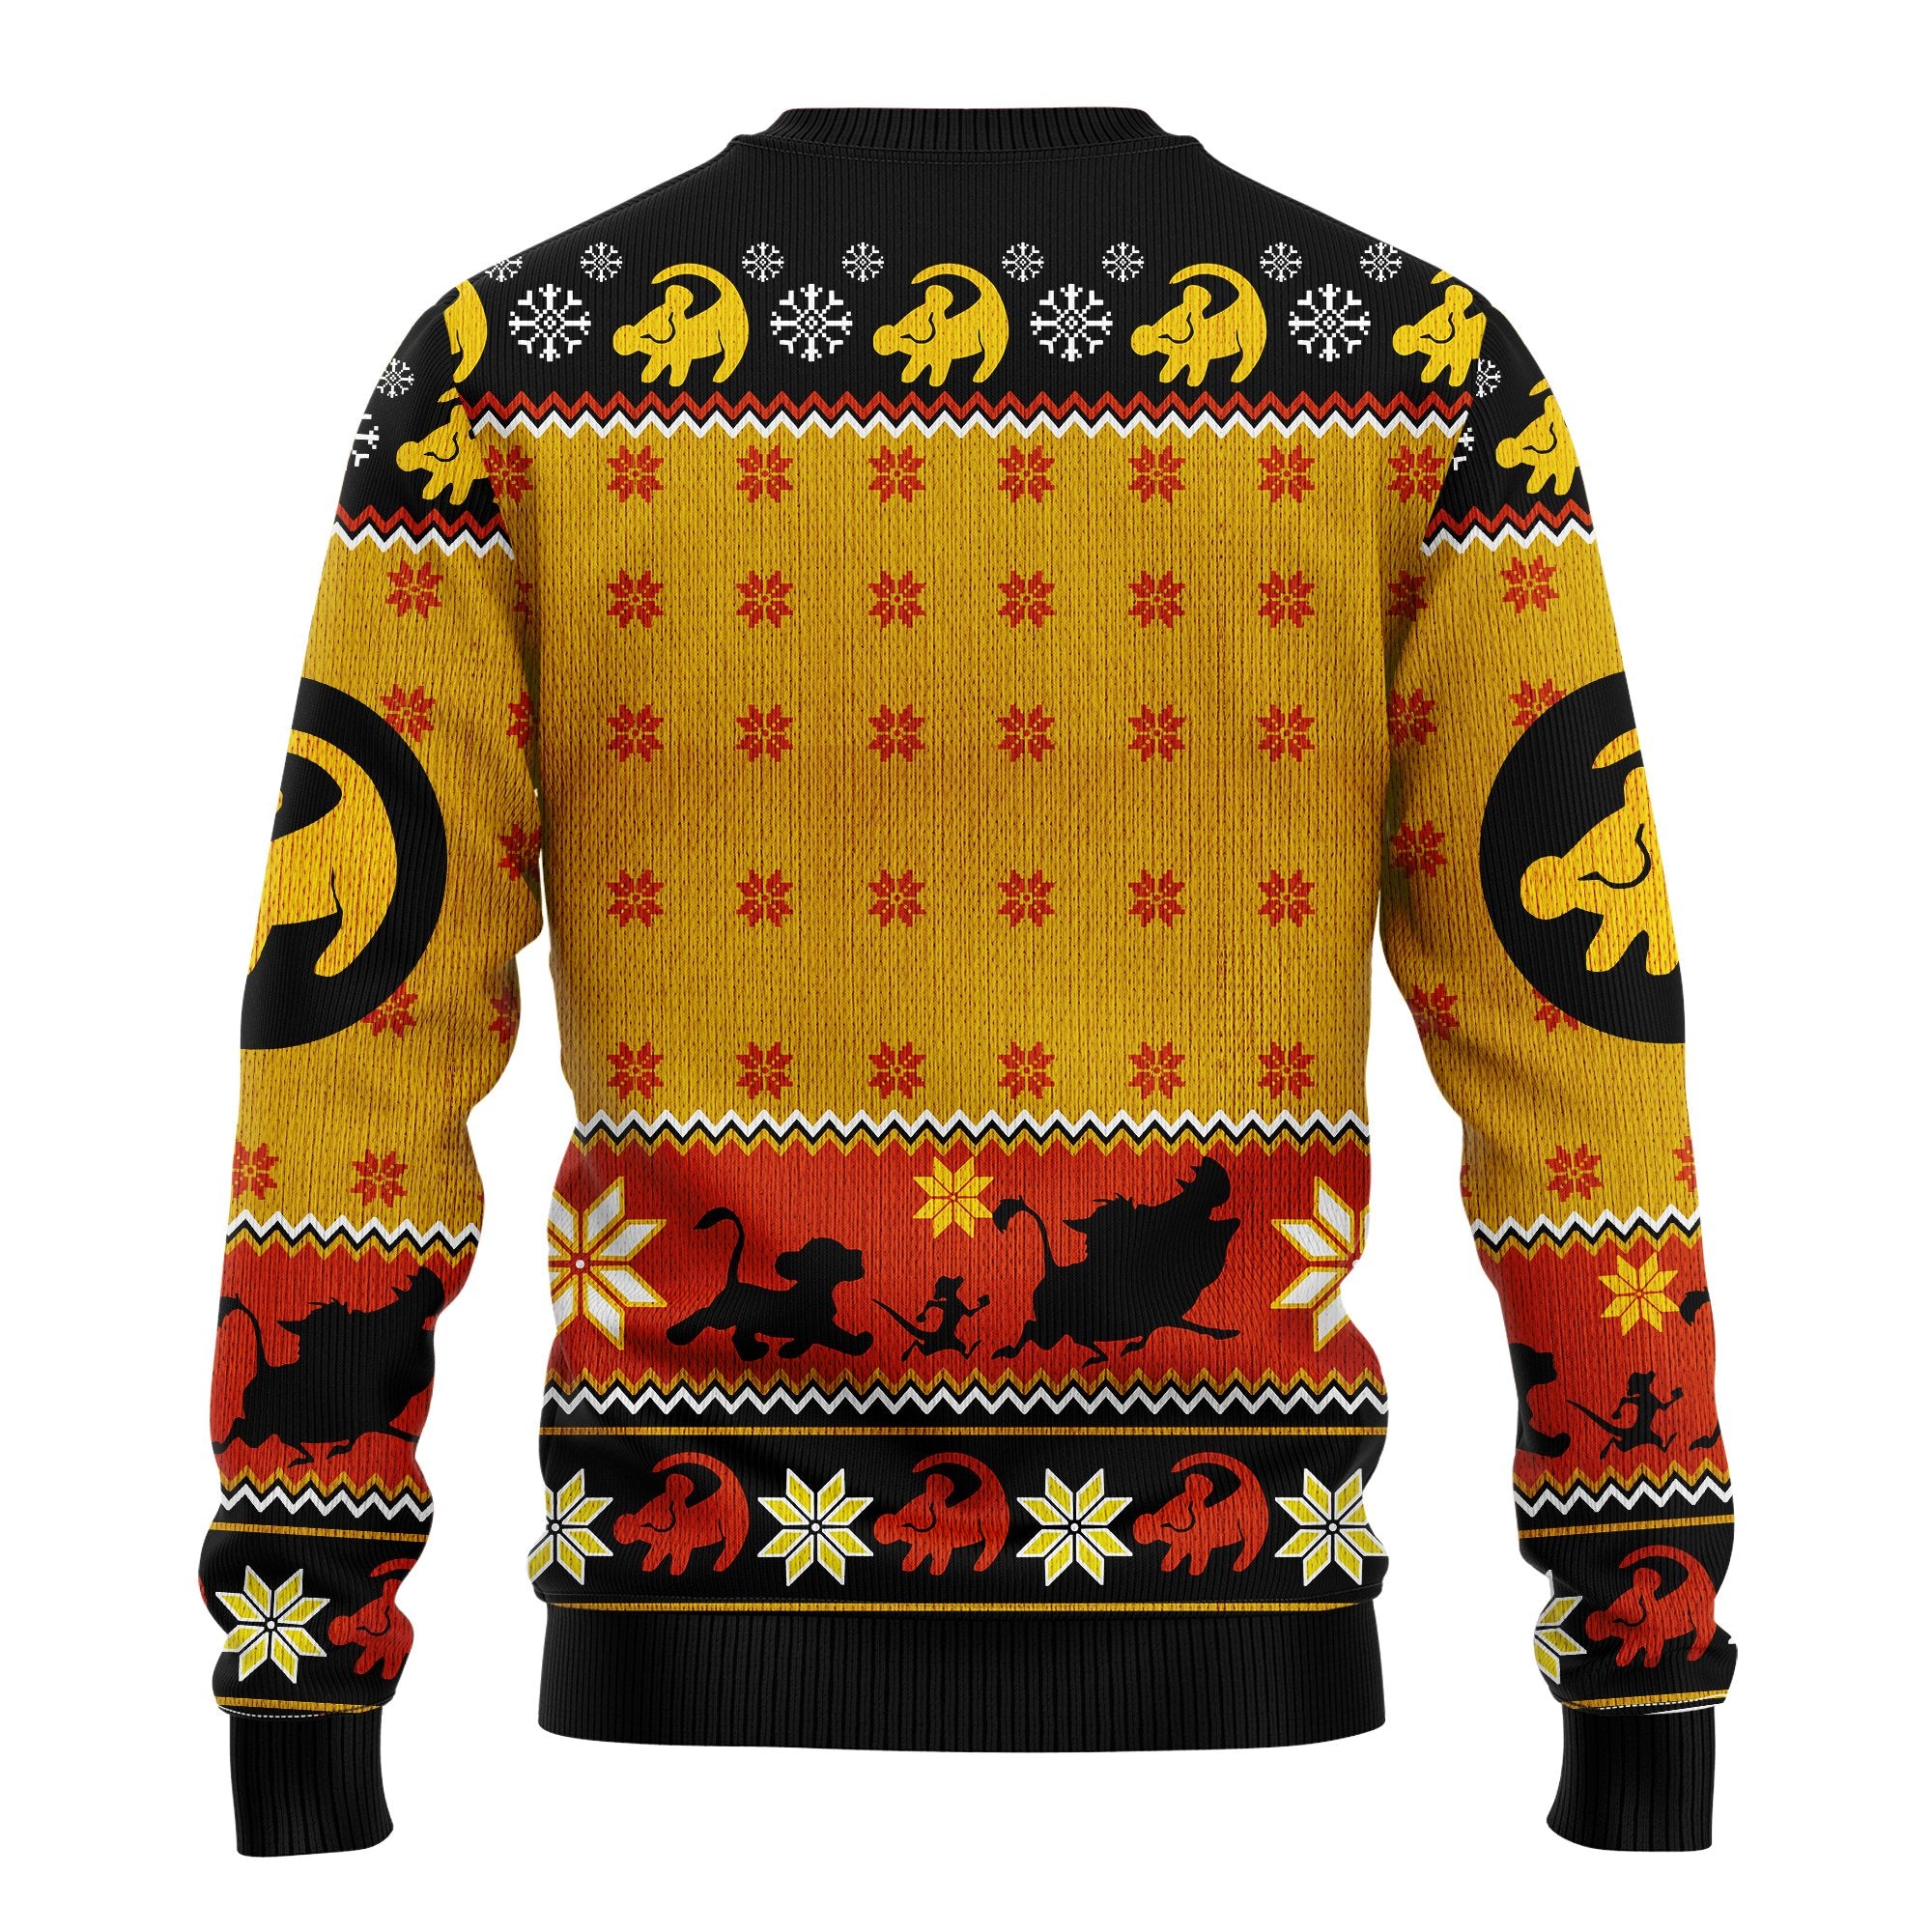 Lion King Simba Ugly Christmas Sweater Amazing Gift Idea Thanksgiving Gift